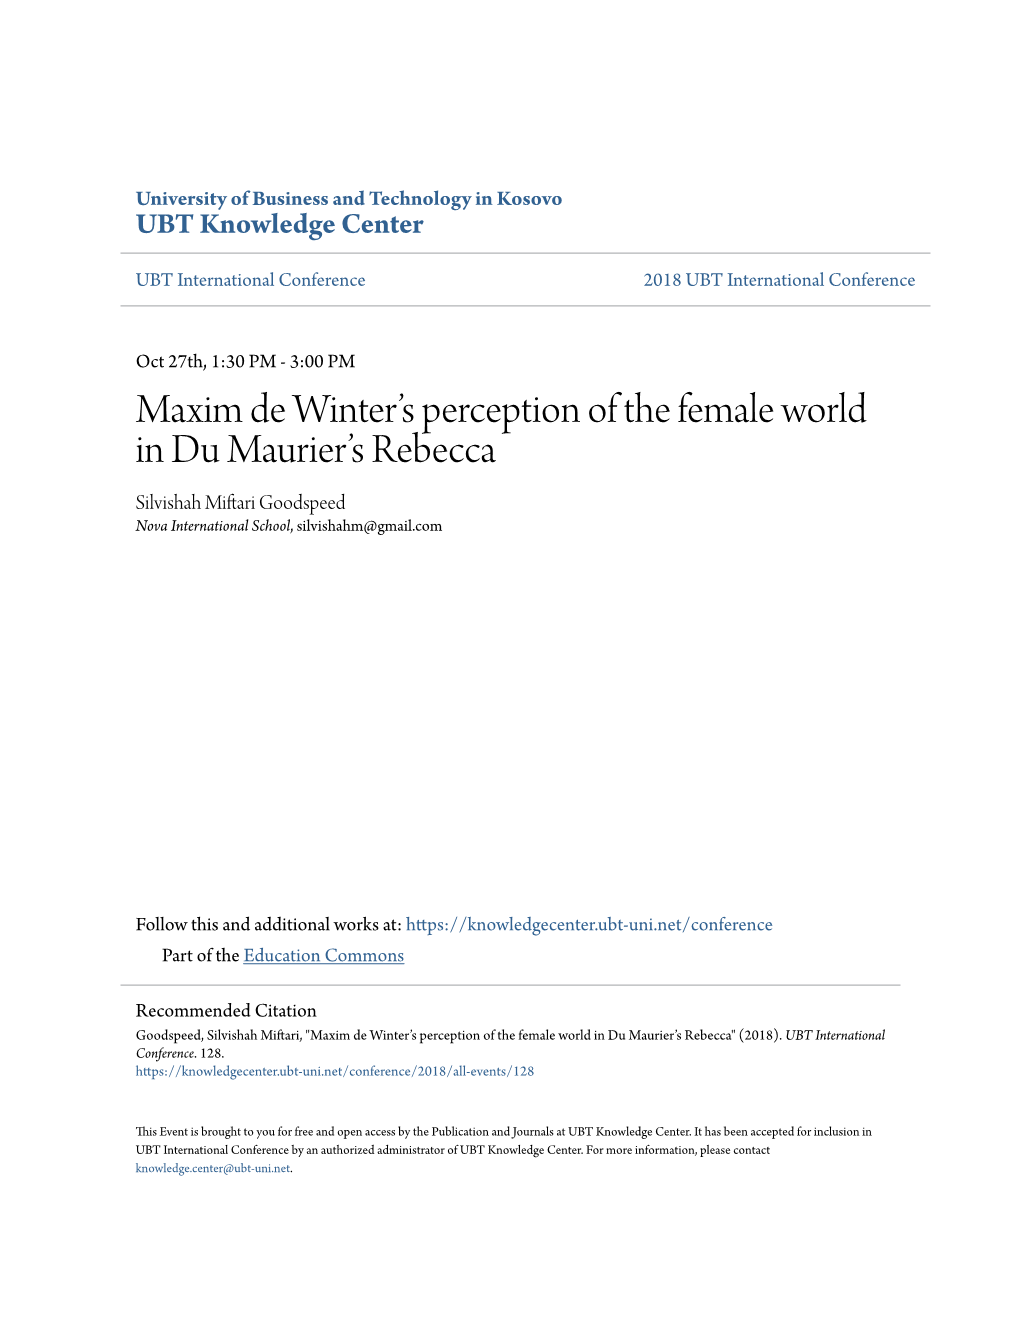 Maxim De Winter's Perception of the Female World in Du Maurier's Rebecca